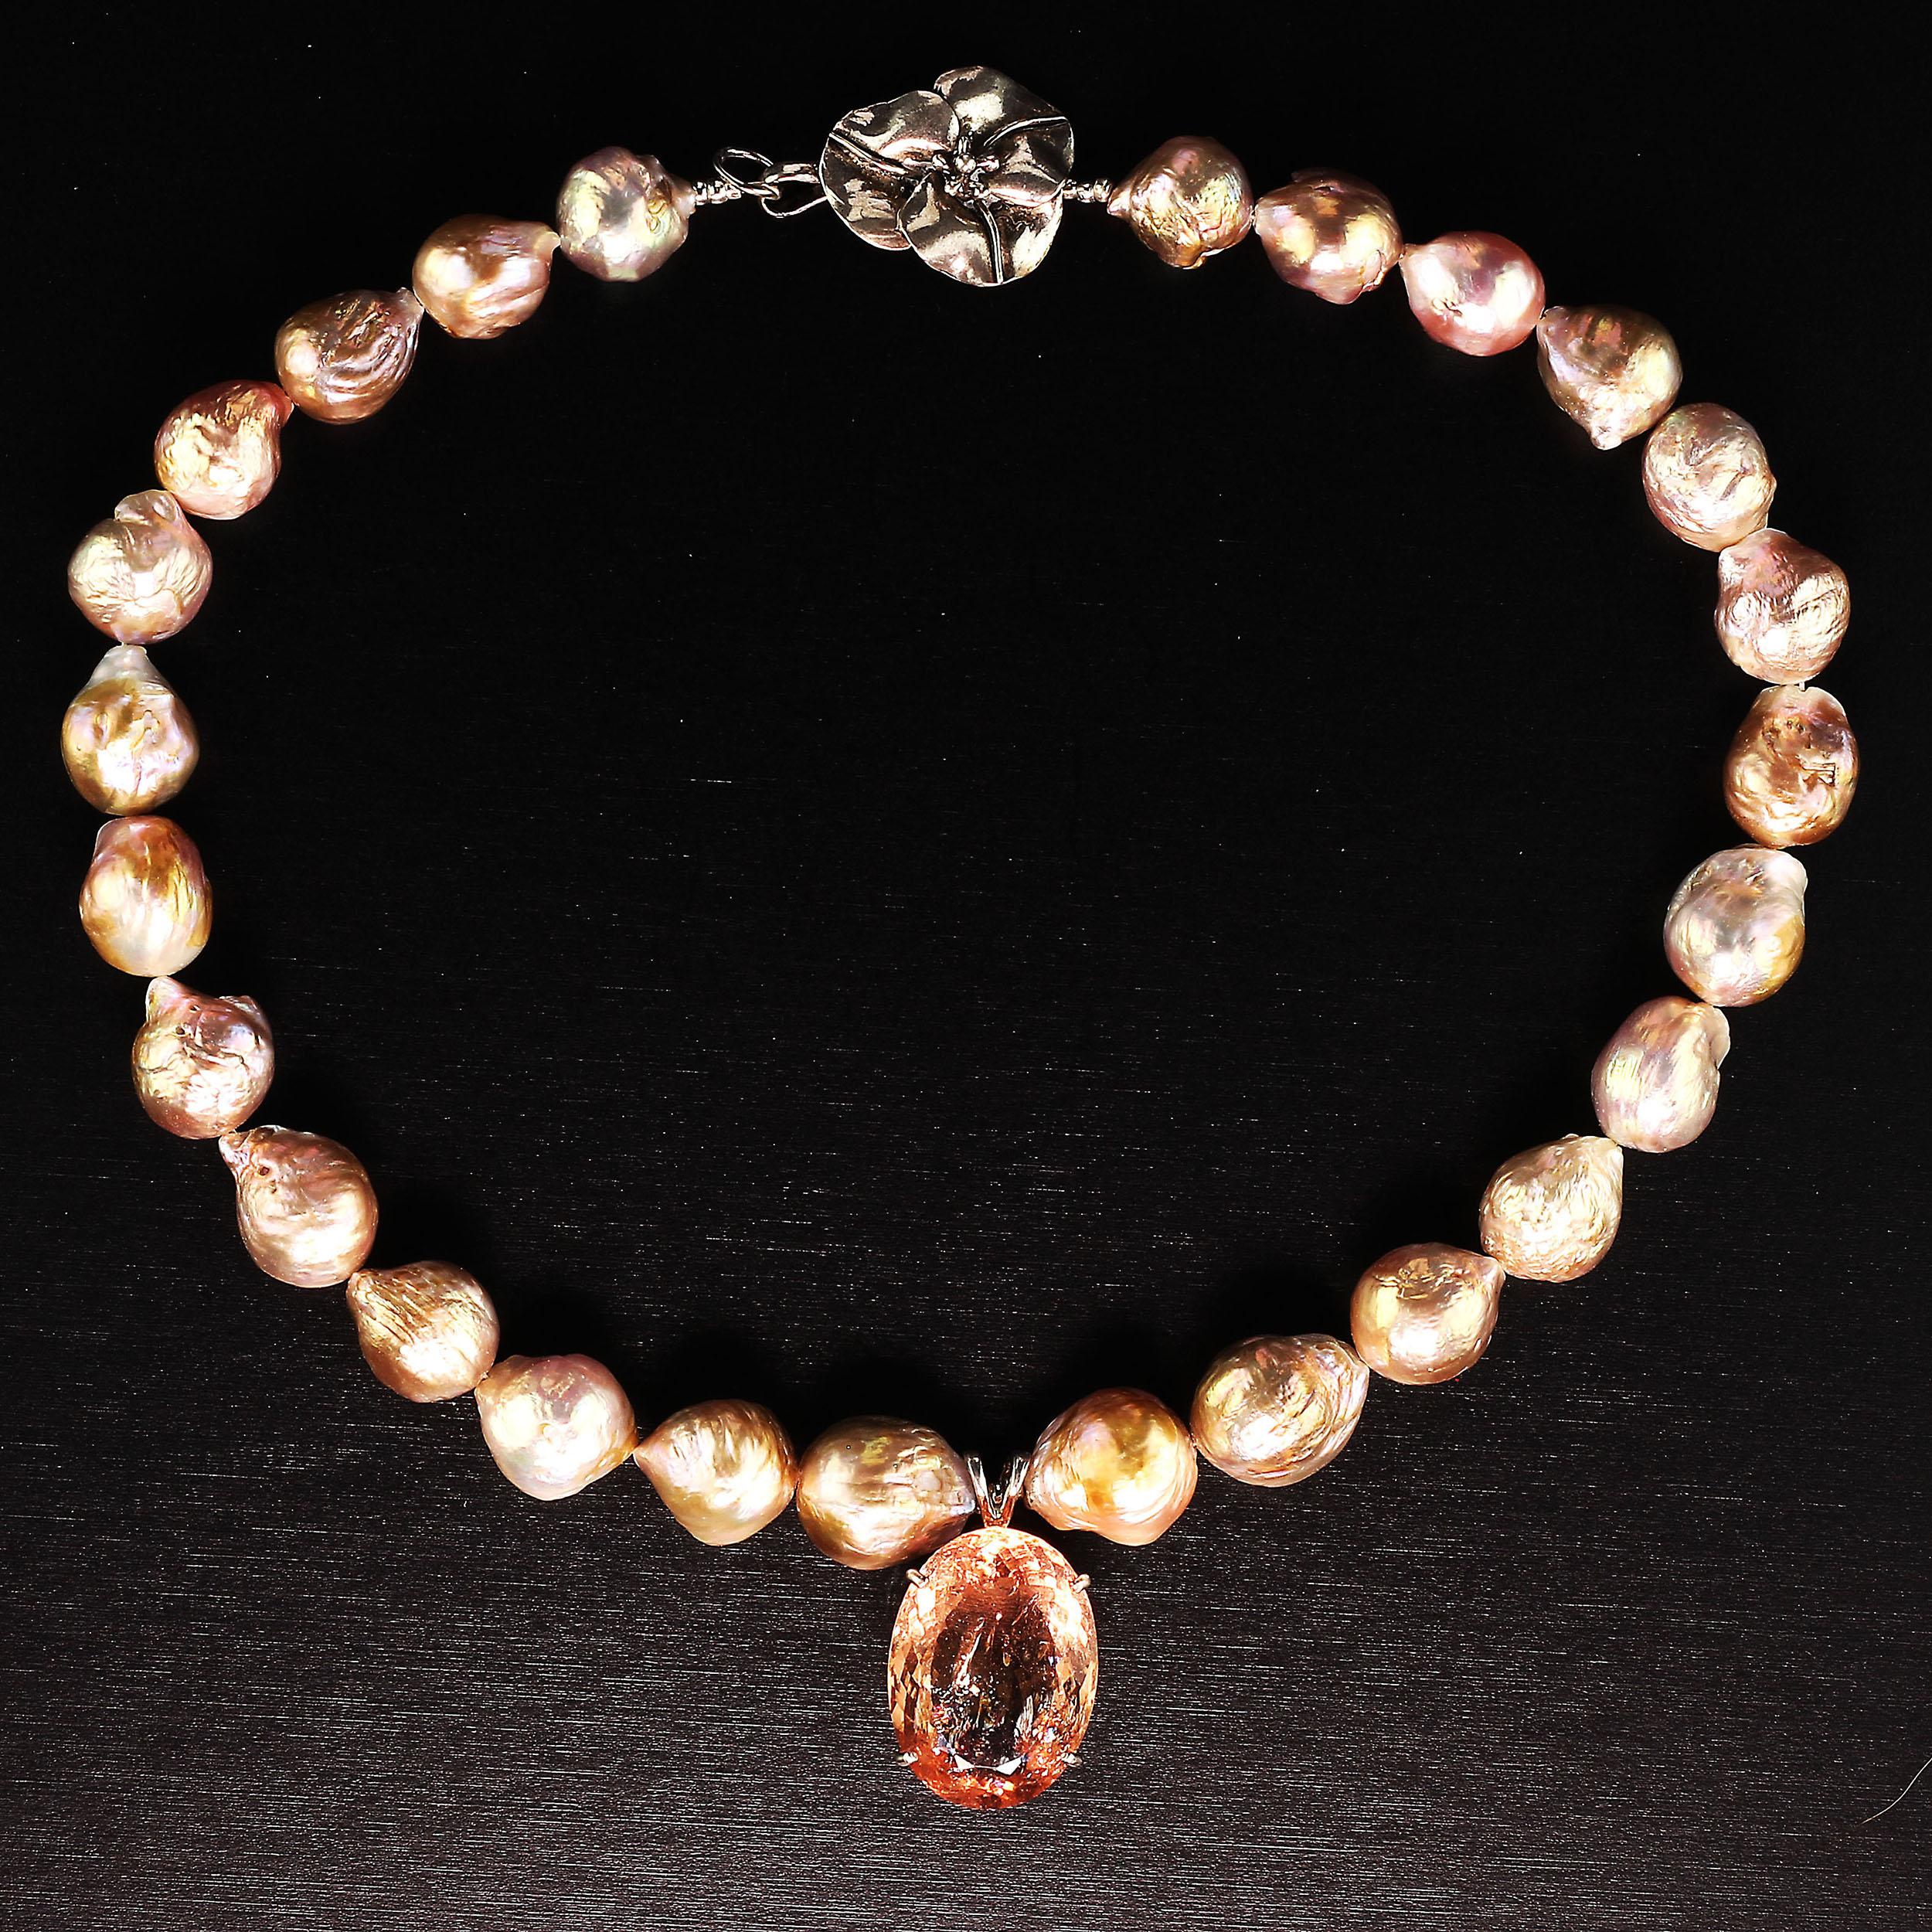 Oval Peach Morganite Pendant on Pearl Necklace June Birthstone 2